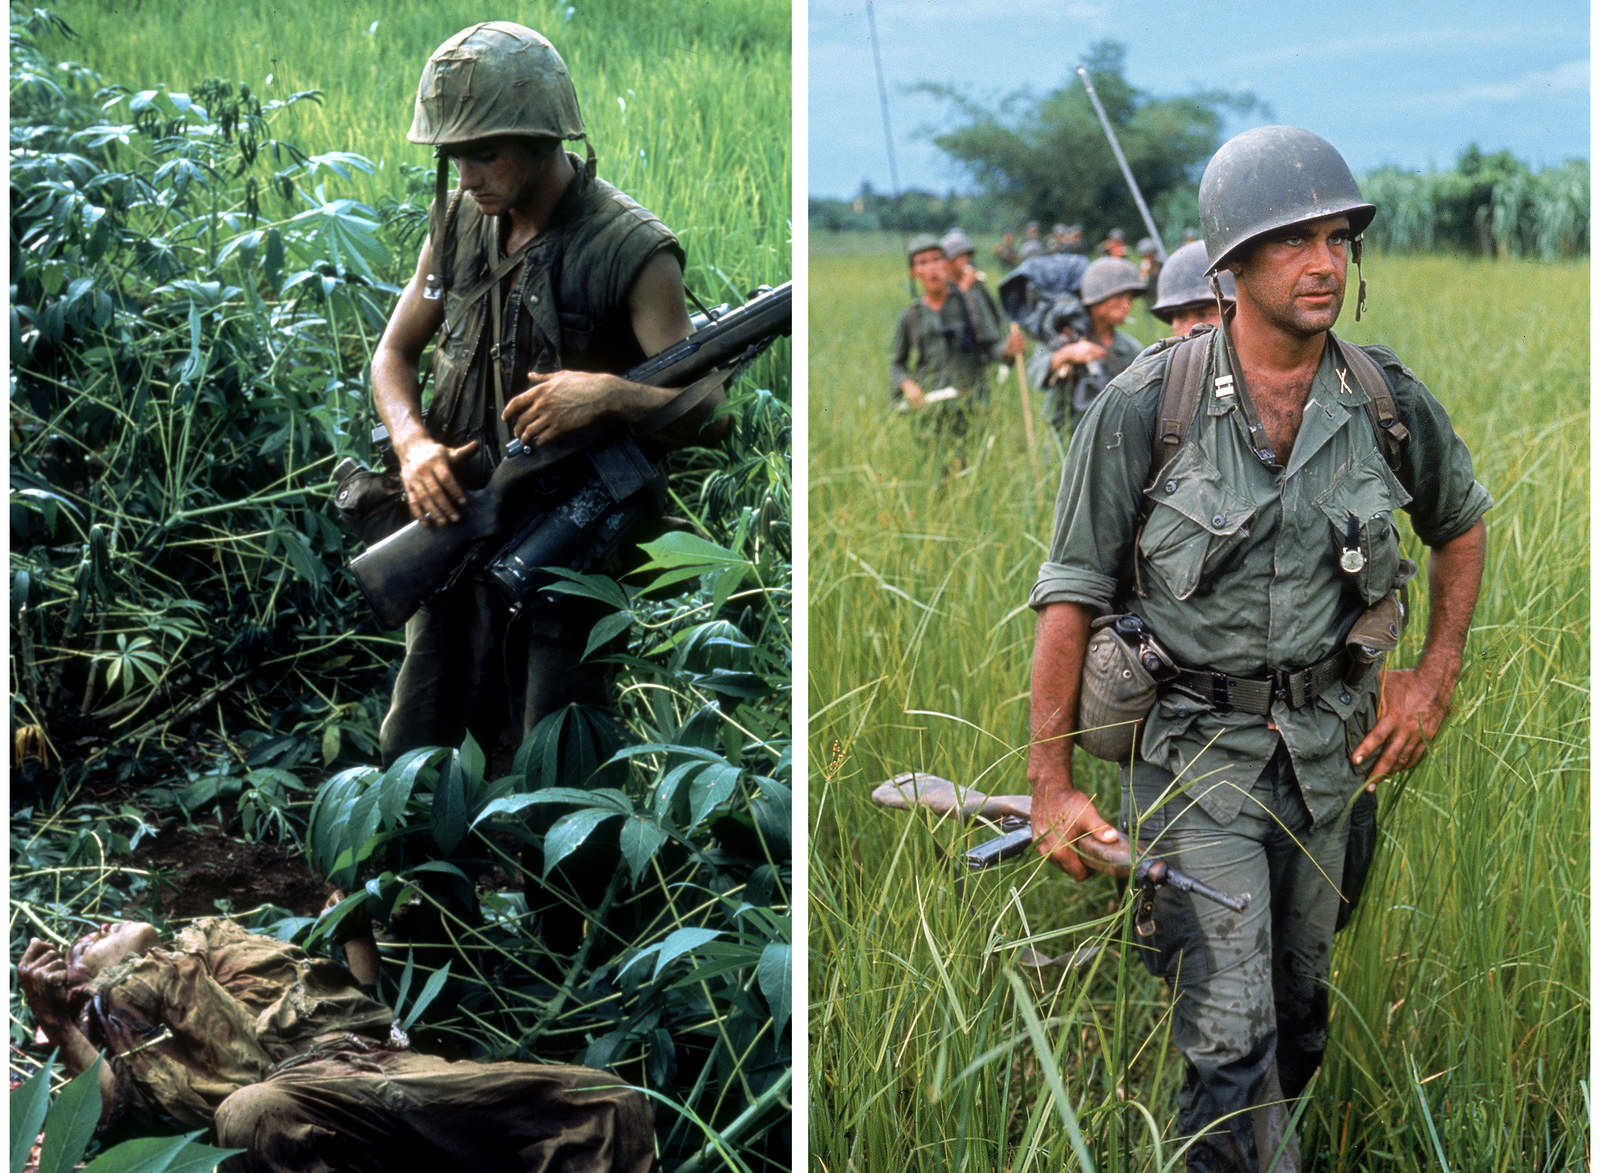 famou photo vietnam war paintings